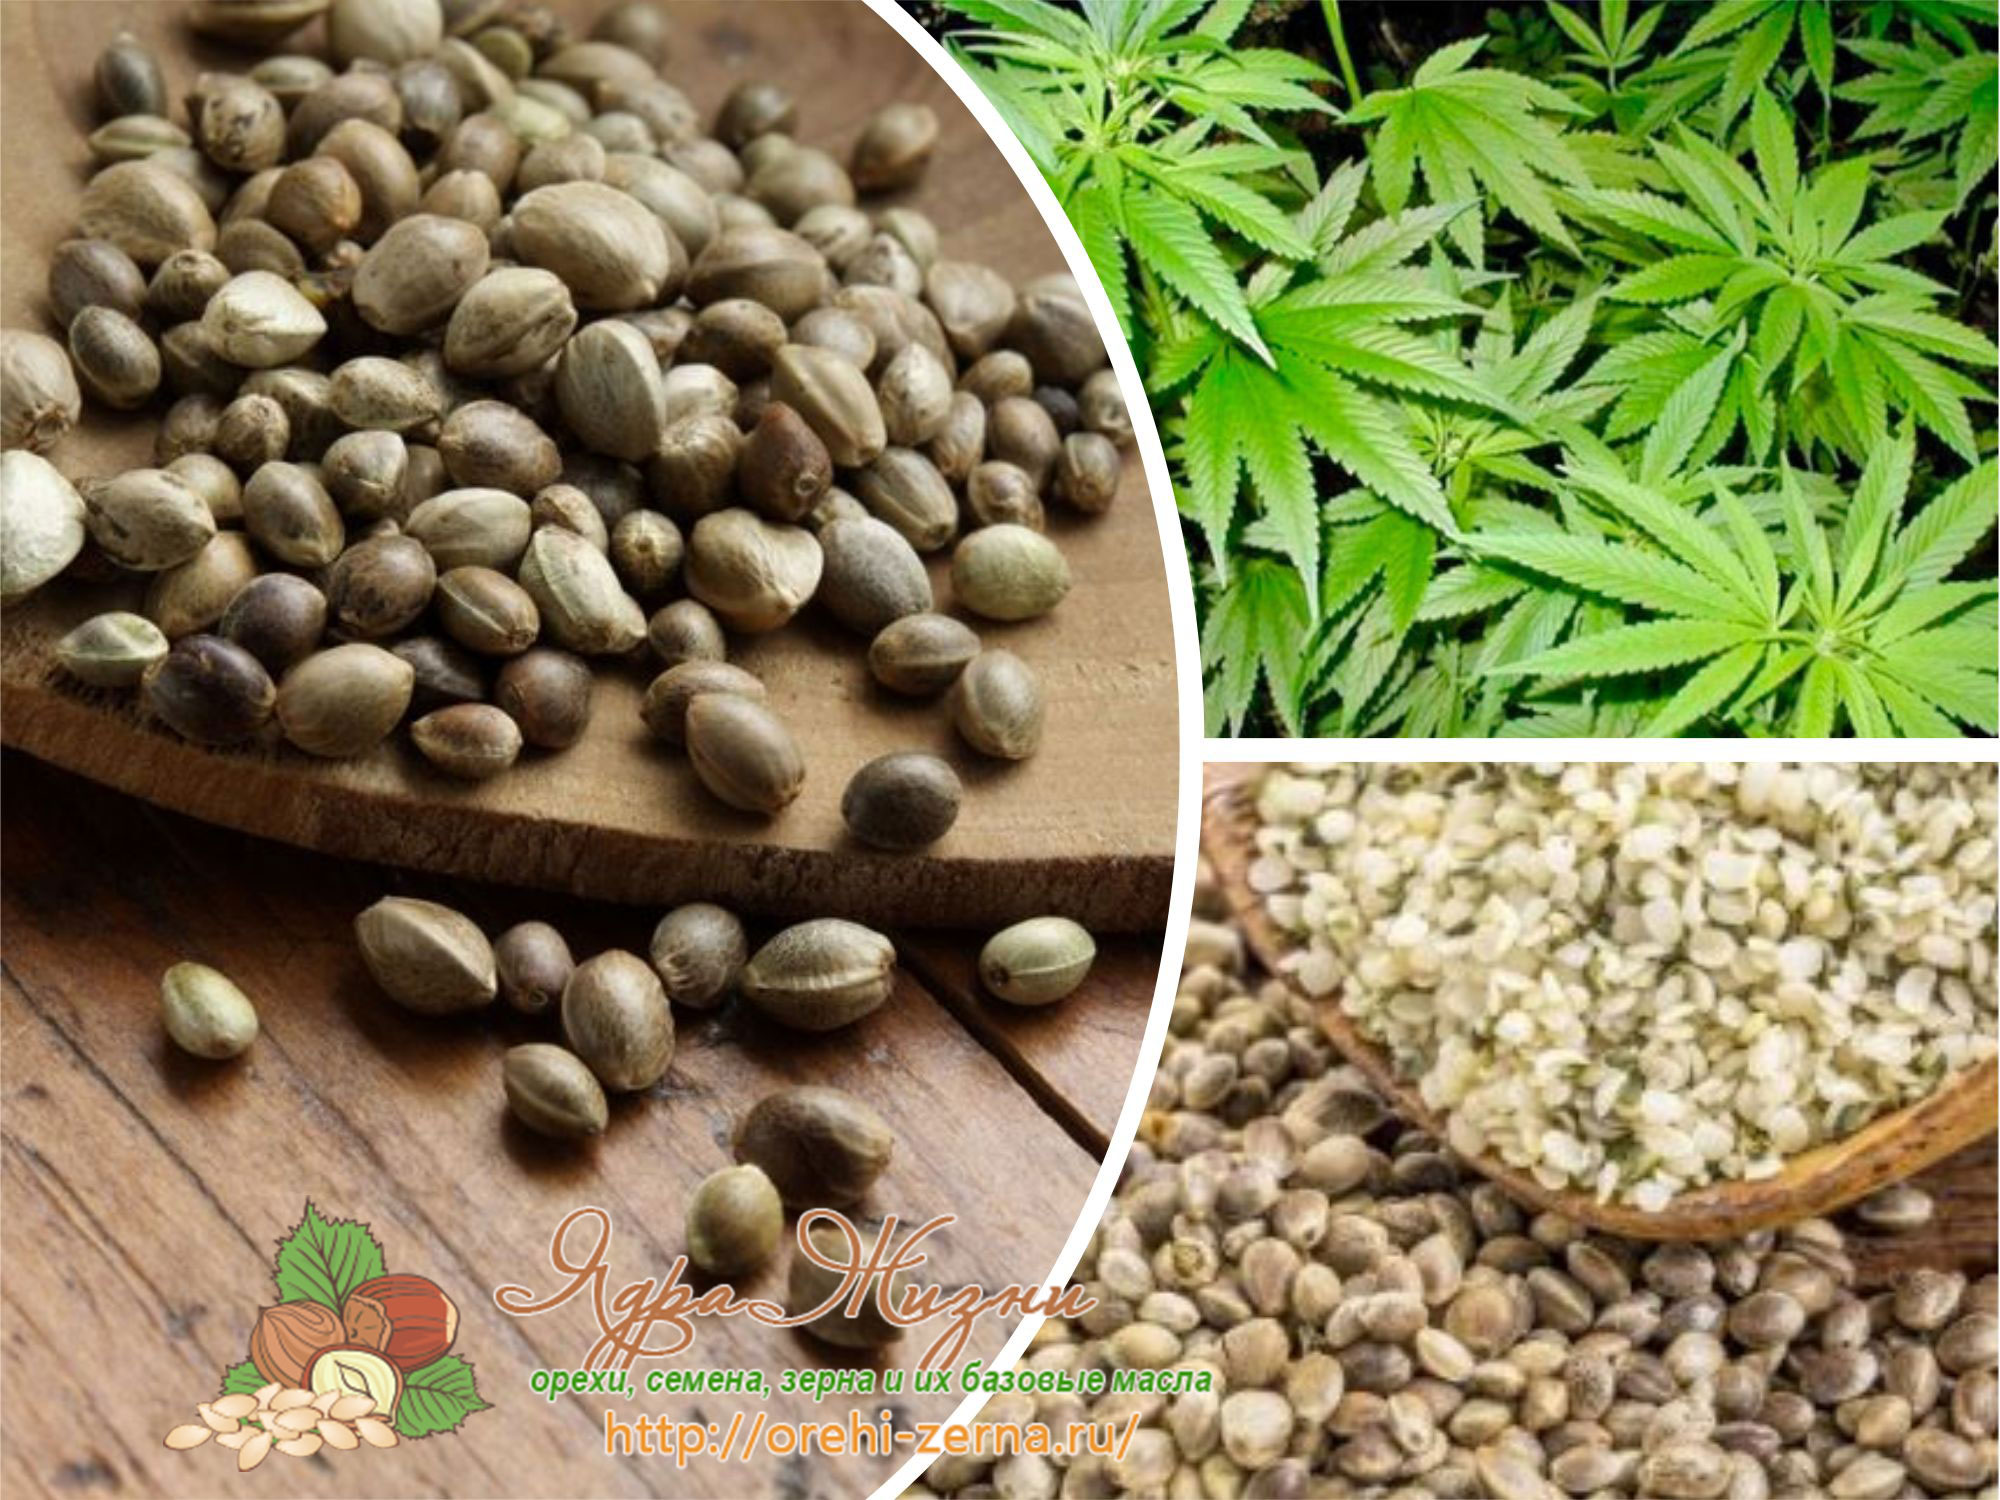 Запрещена ли покупка семян конопли марихуана своими силами